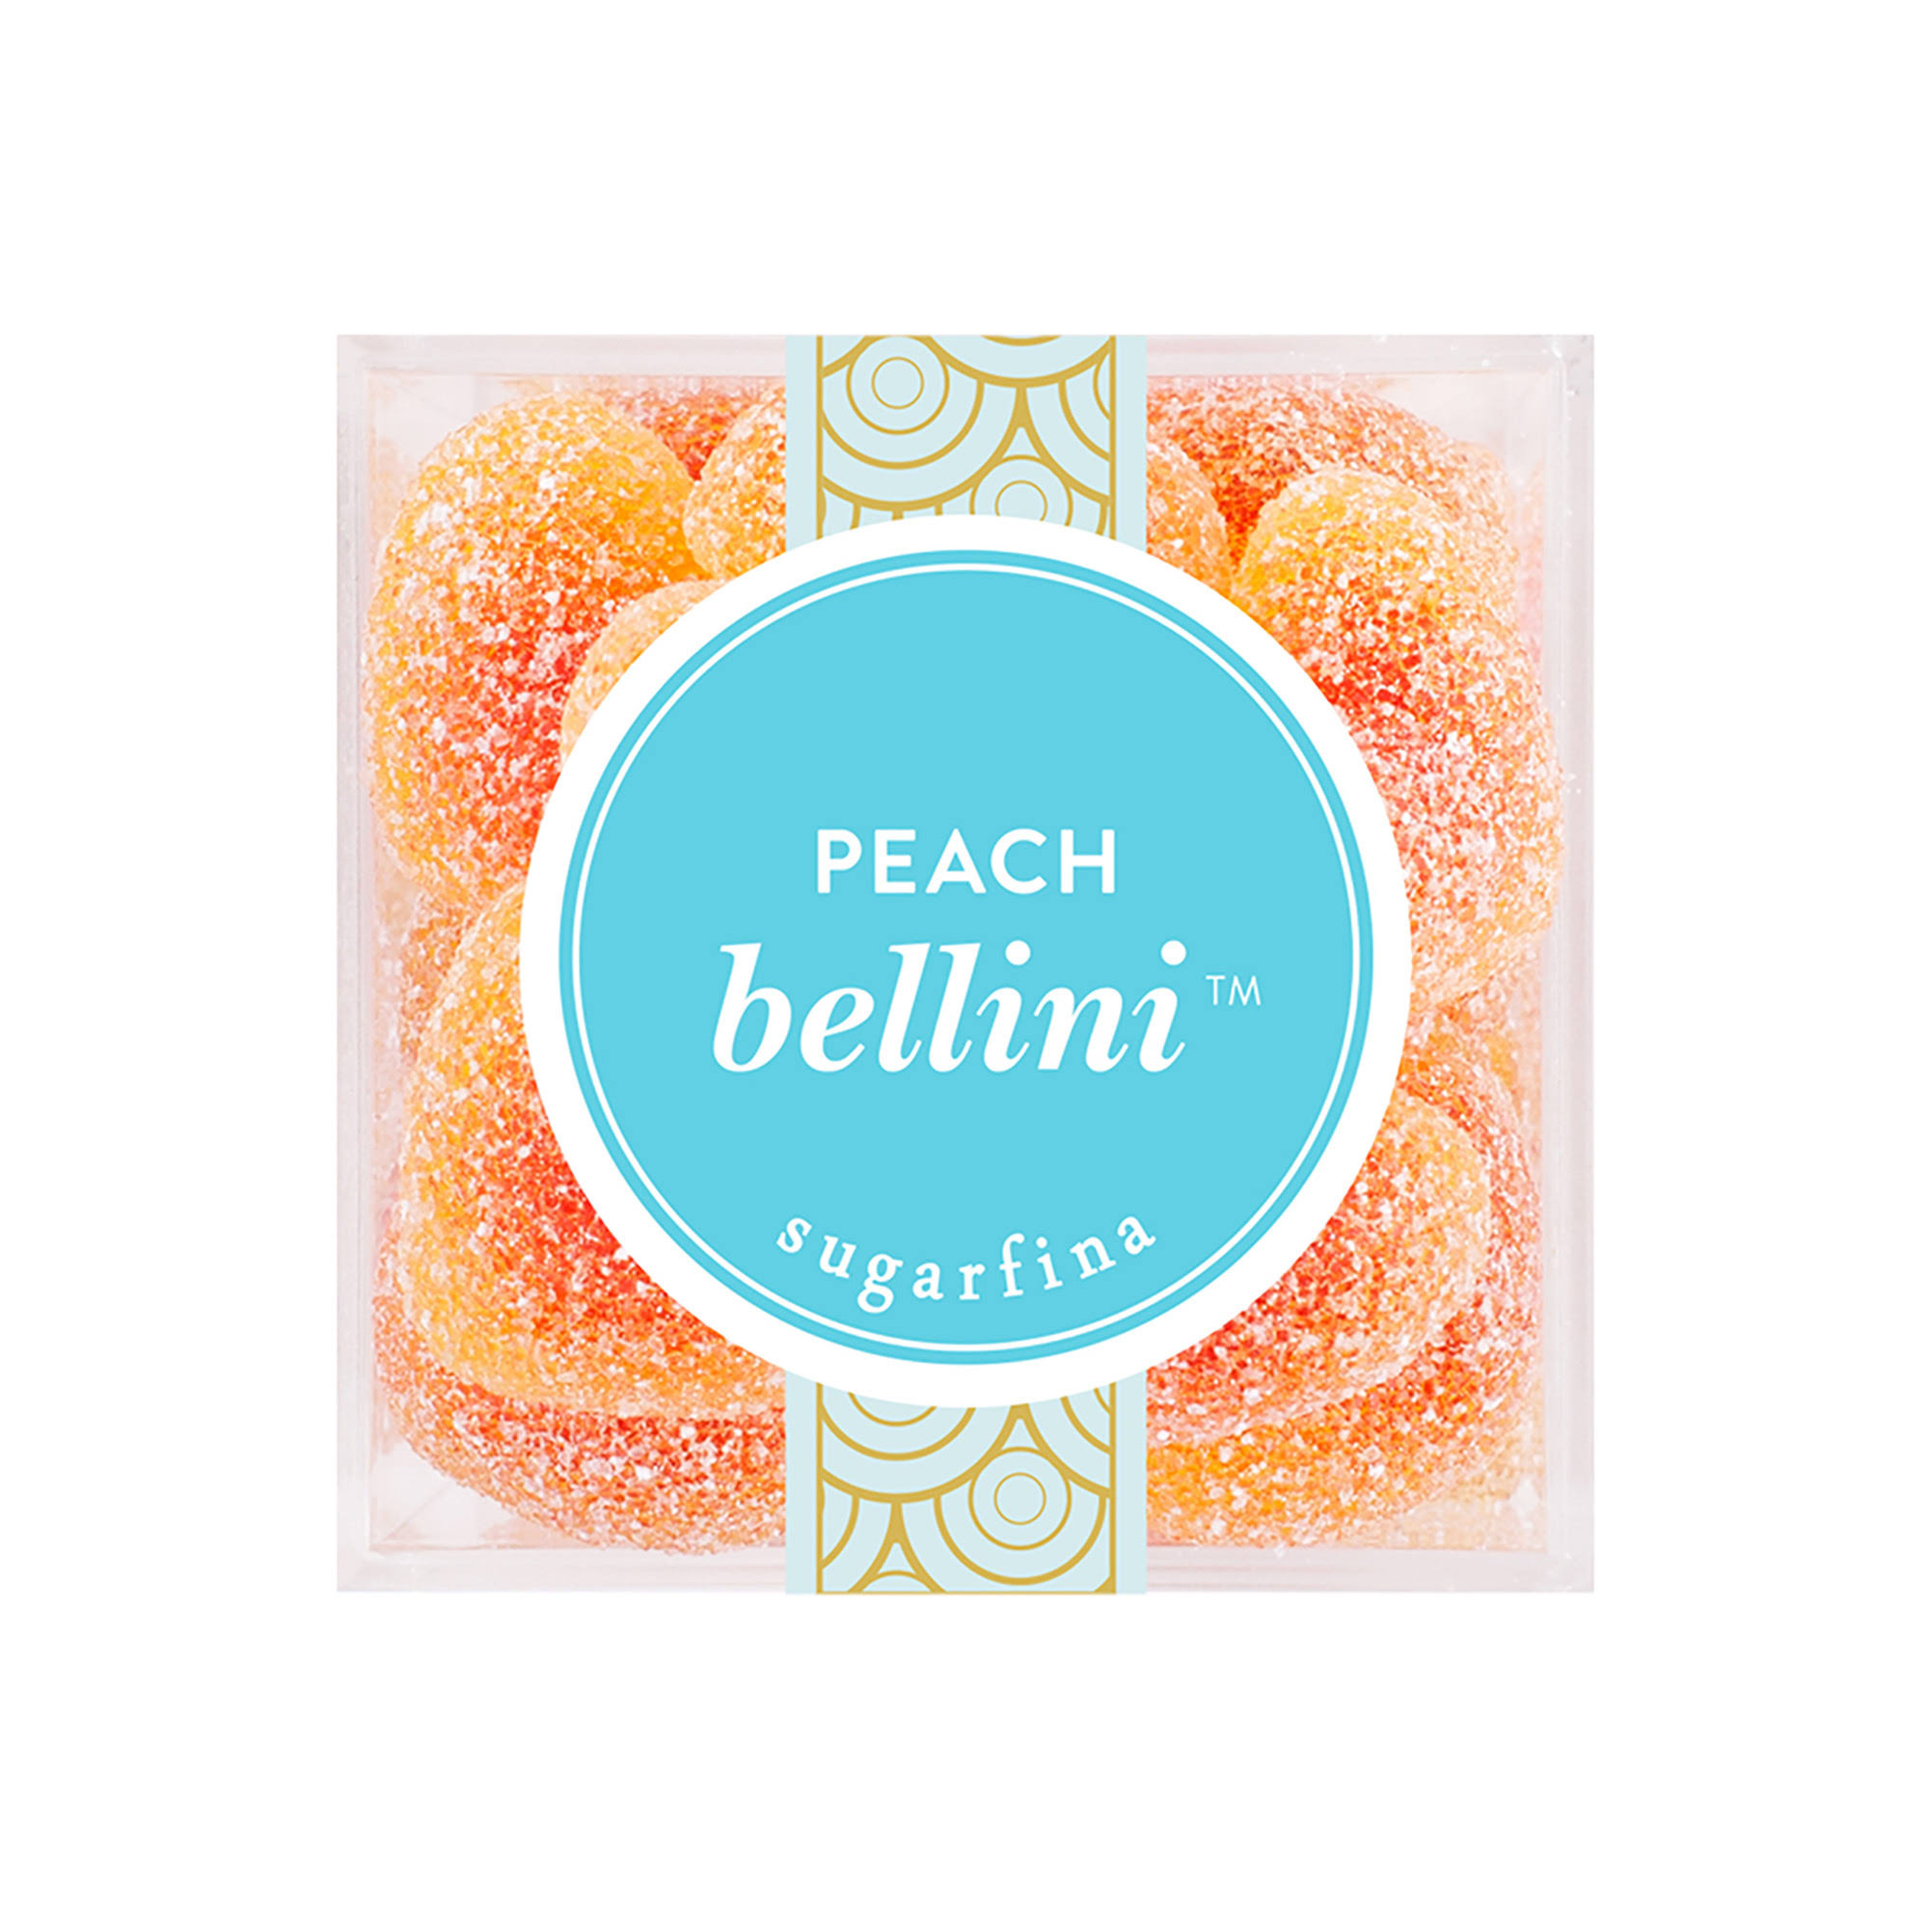 Sugarfina Peach Bellini Small Candy Cube Gummies, 3.6oz, 1 Count